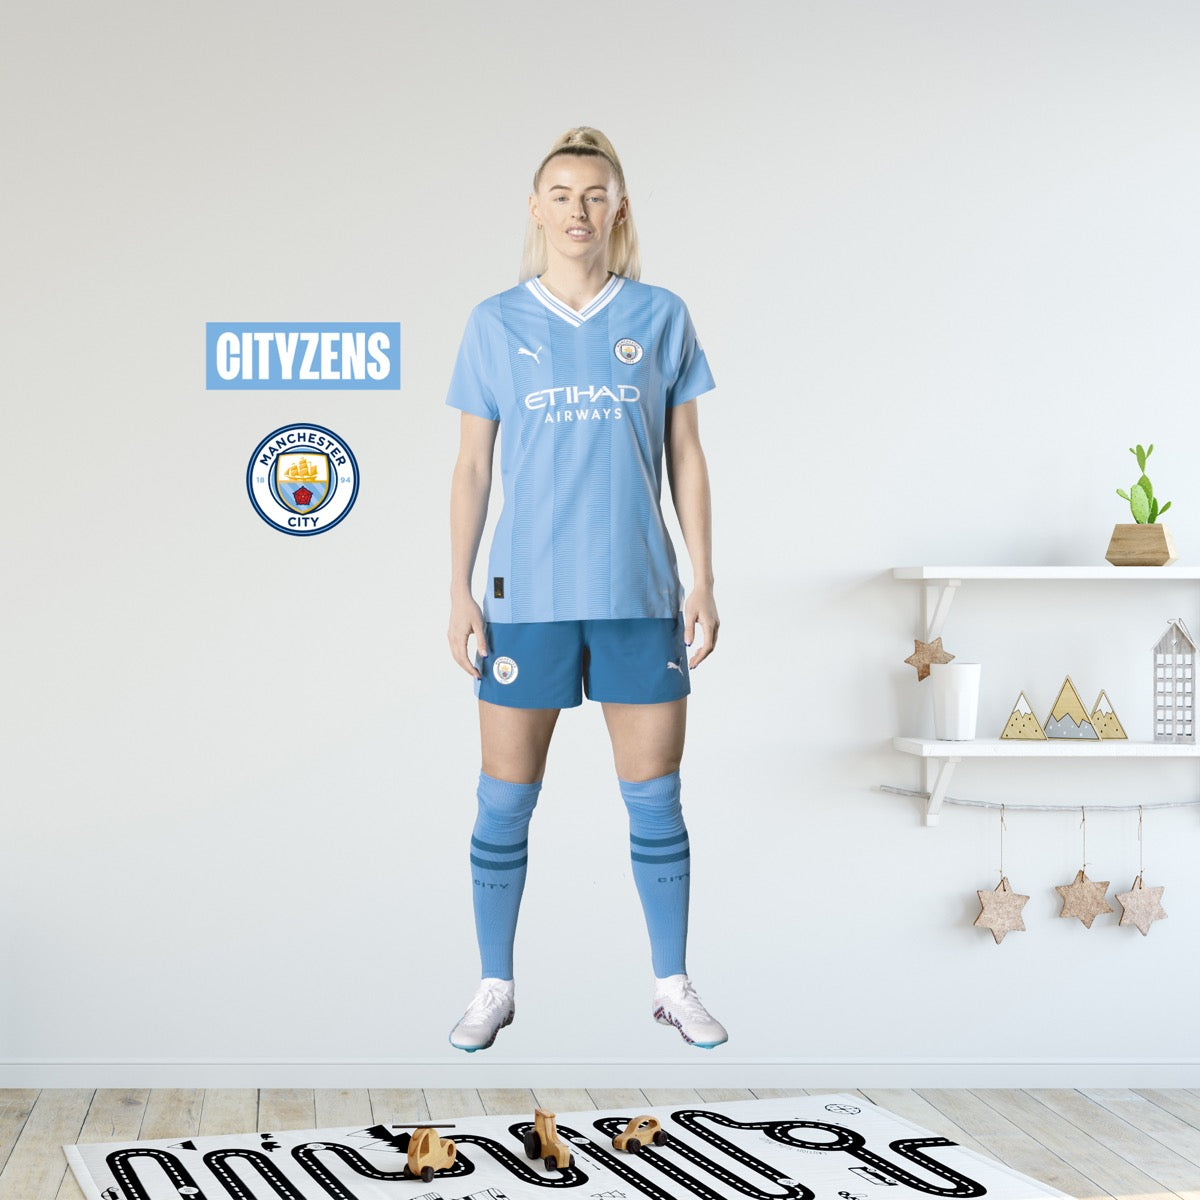 Manchester City Football Club - Chloe Kelly 23/24 Player Wall Sticker + Bonus Decal Set